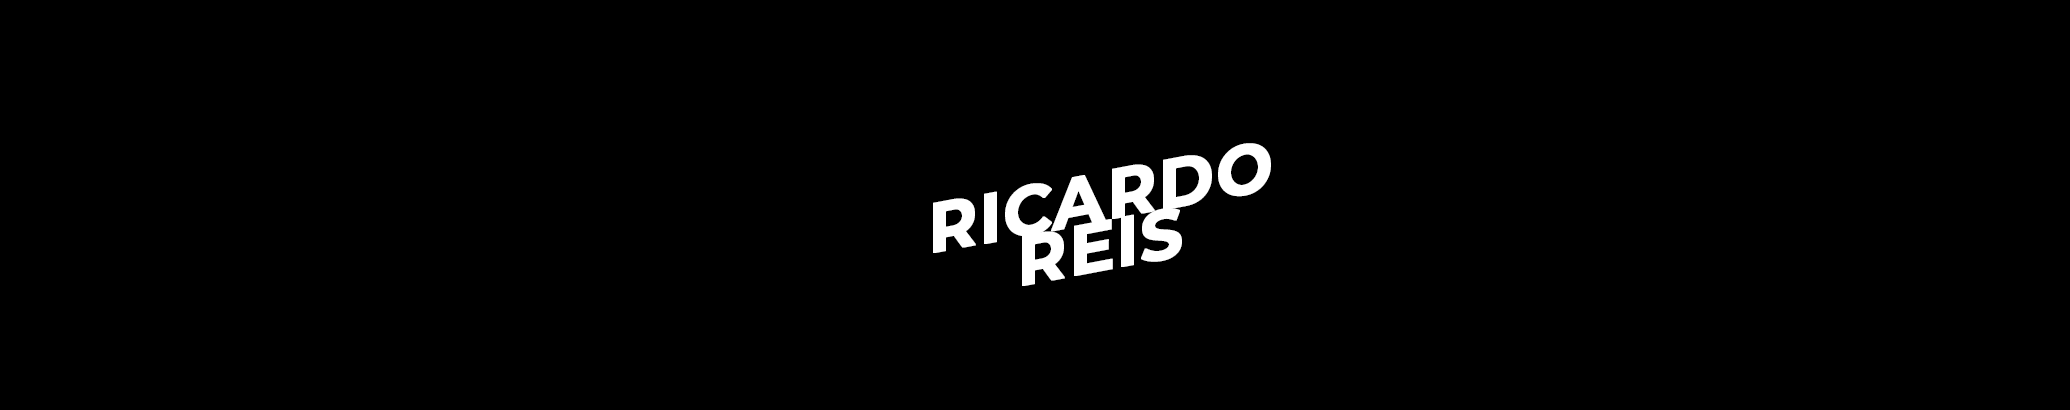 Banner de perfil de Ricardo Reis